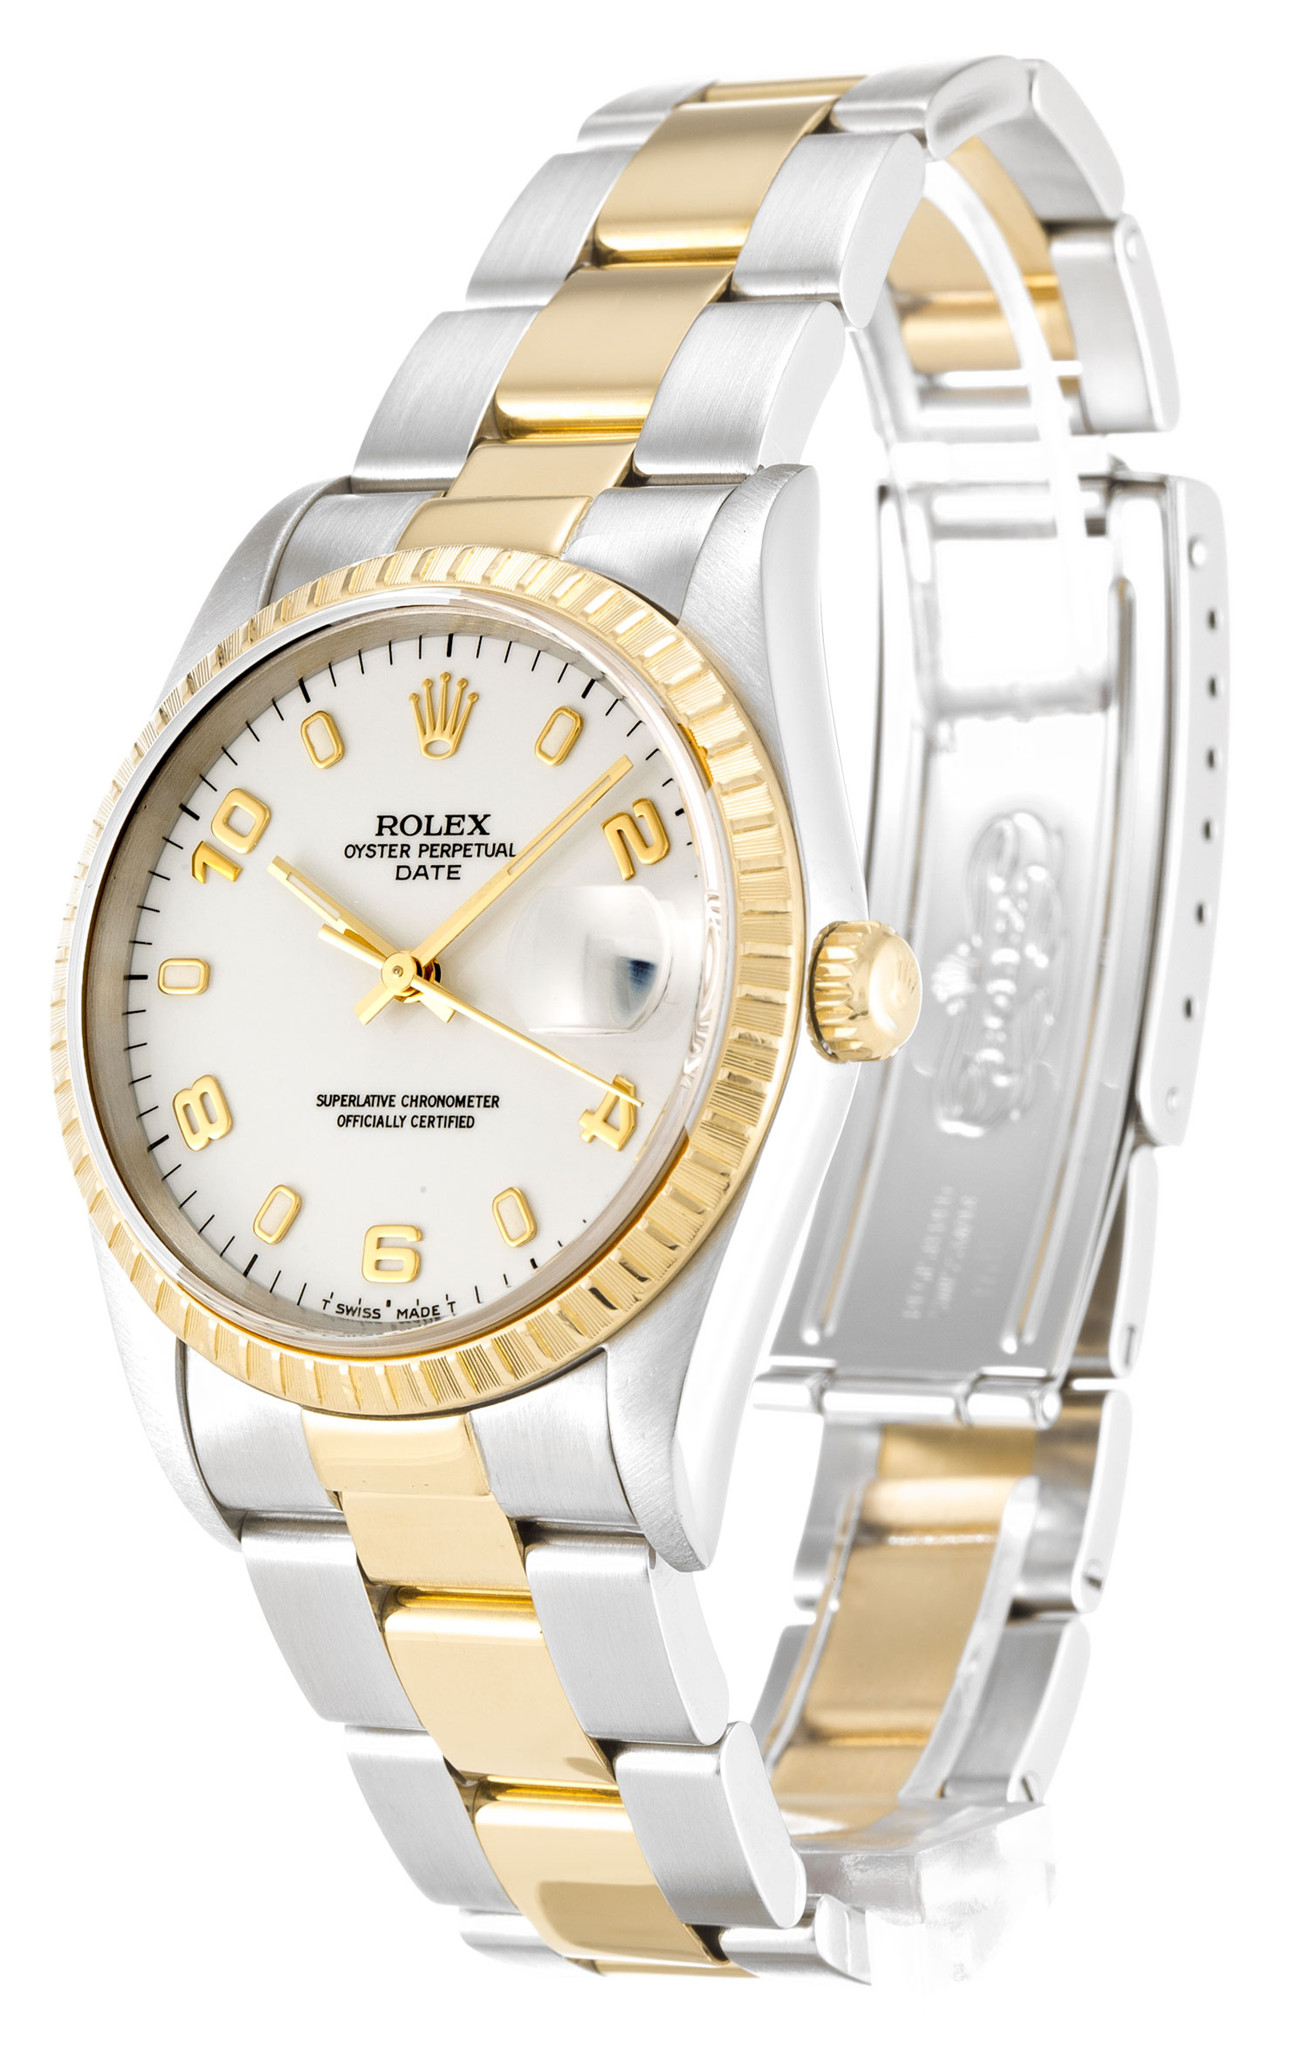 Replica Rolex Auster Perpetual Datum Weiße Zifferblattennummer Marker 15223 34mm